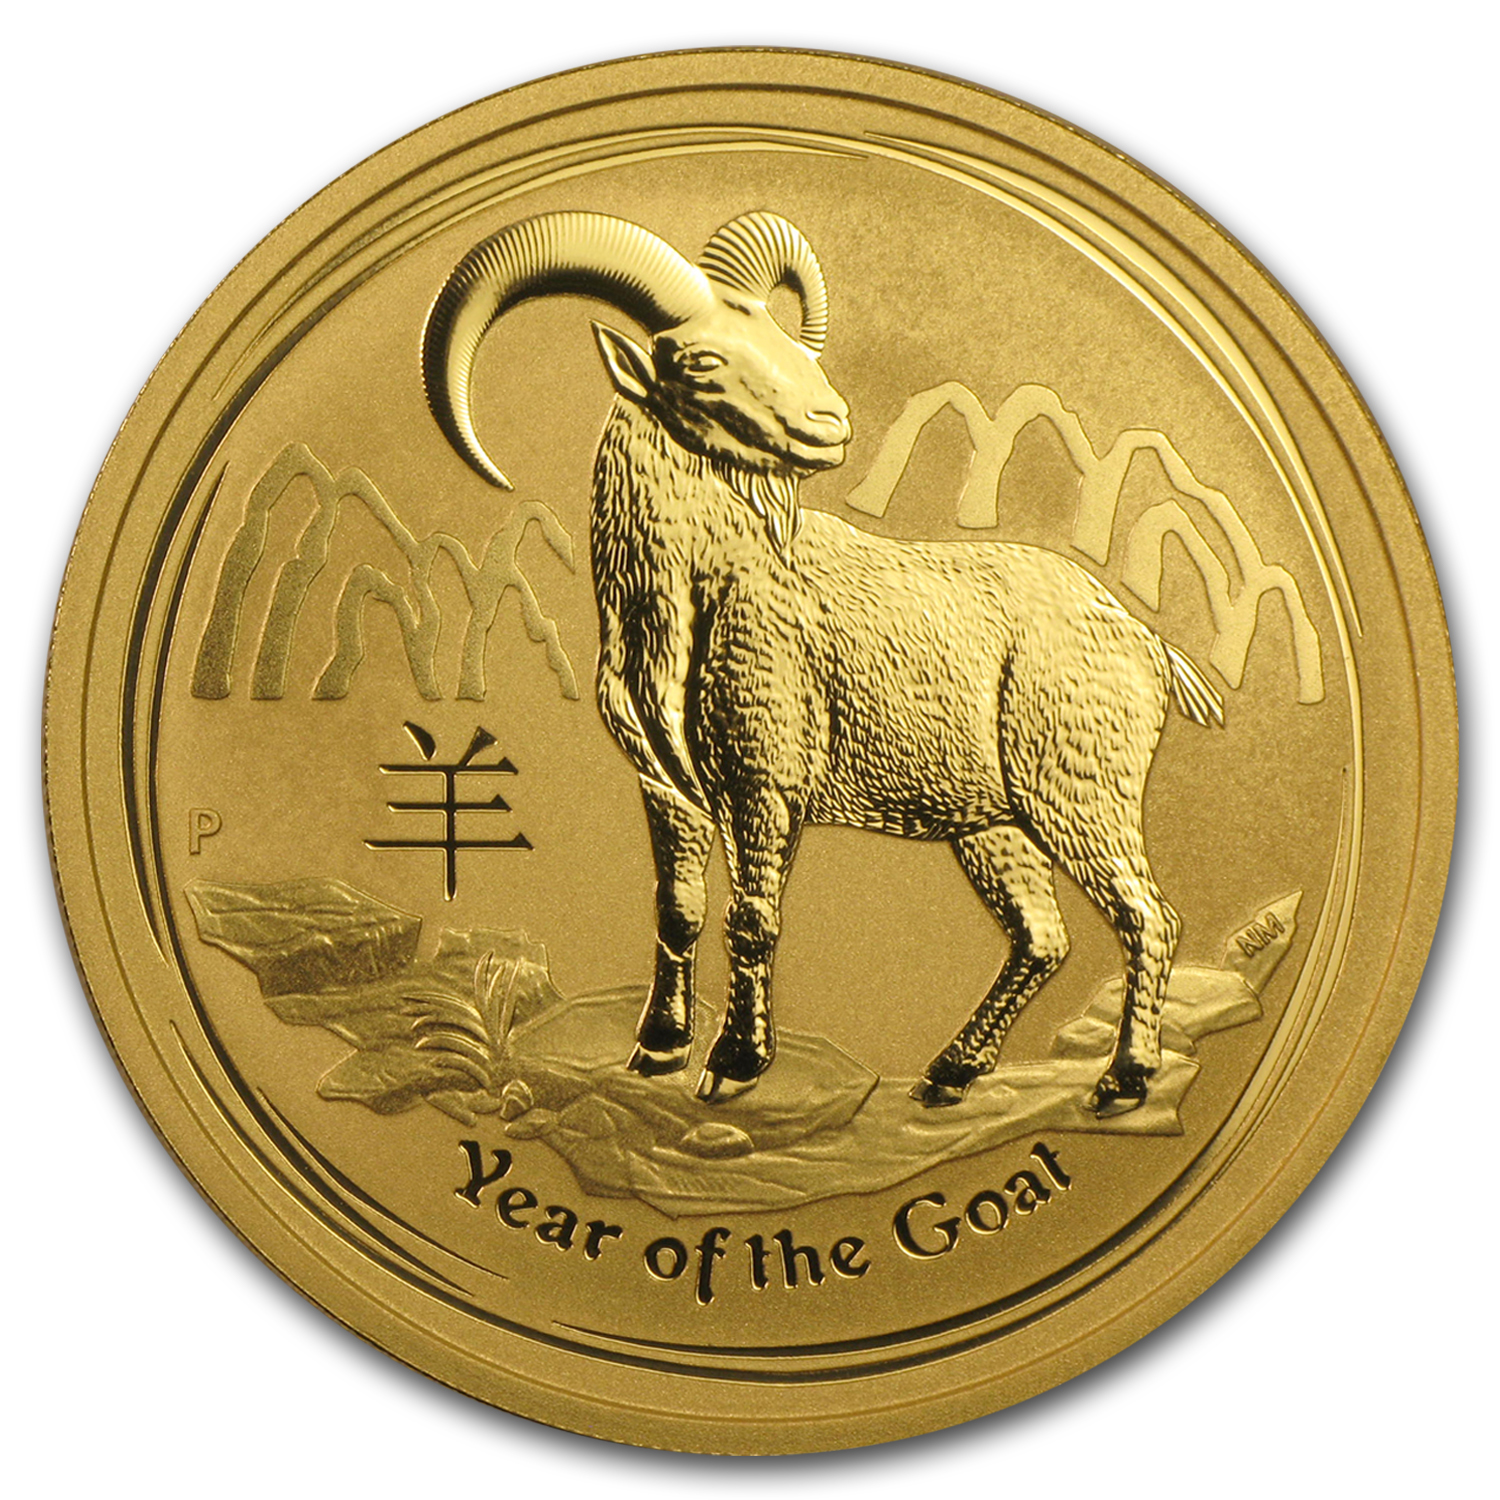 Lot of 10-2015 1 oz Silver Lunar Year of The Goat BU Australian Perth Mint In 